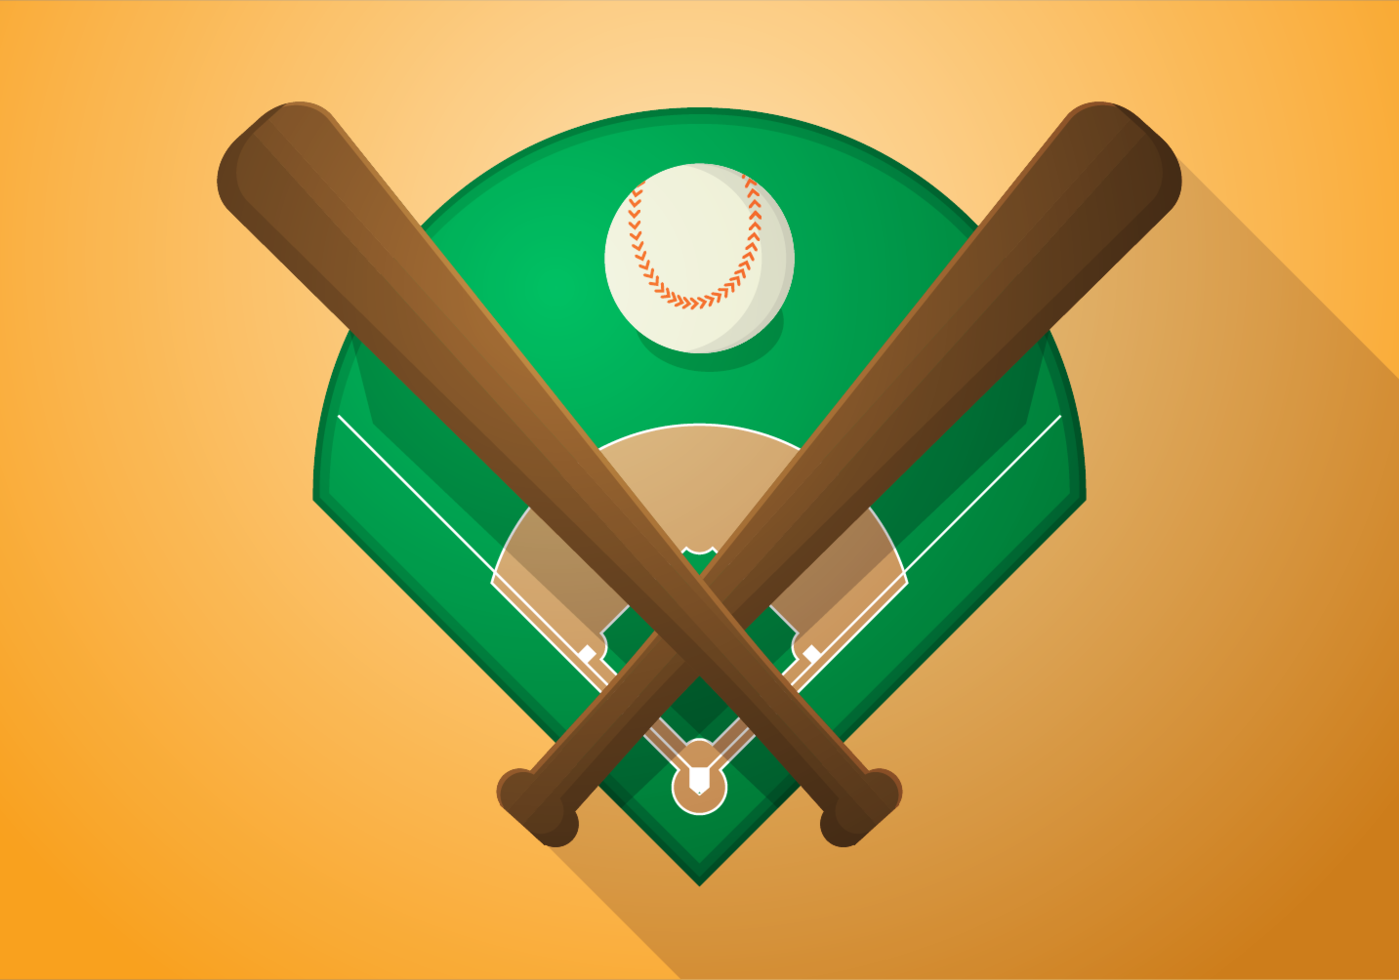 Free Vector Illustration of Baseball Diamond.